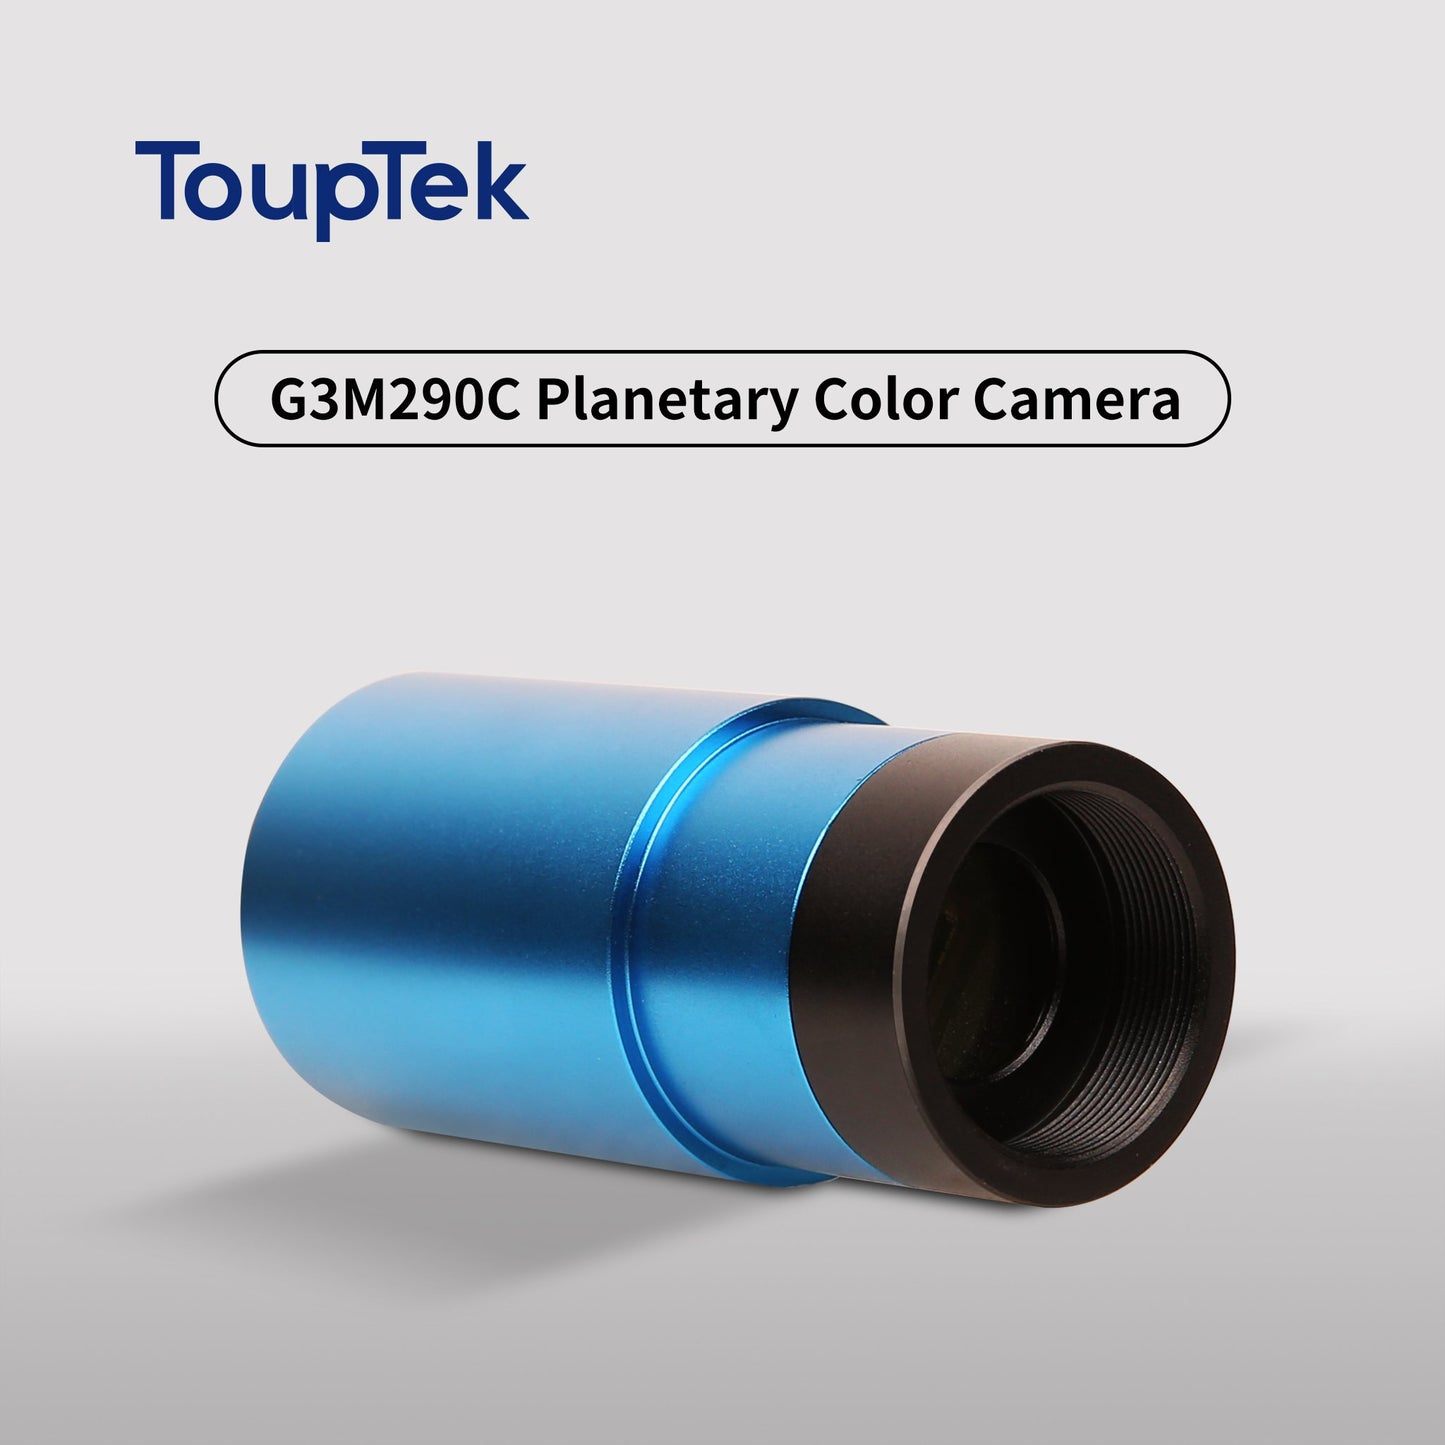 G3M290C Planetary Color Camera